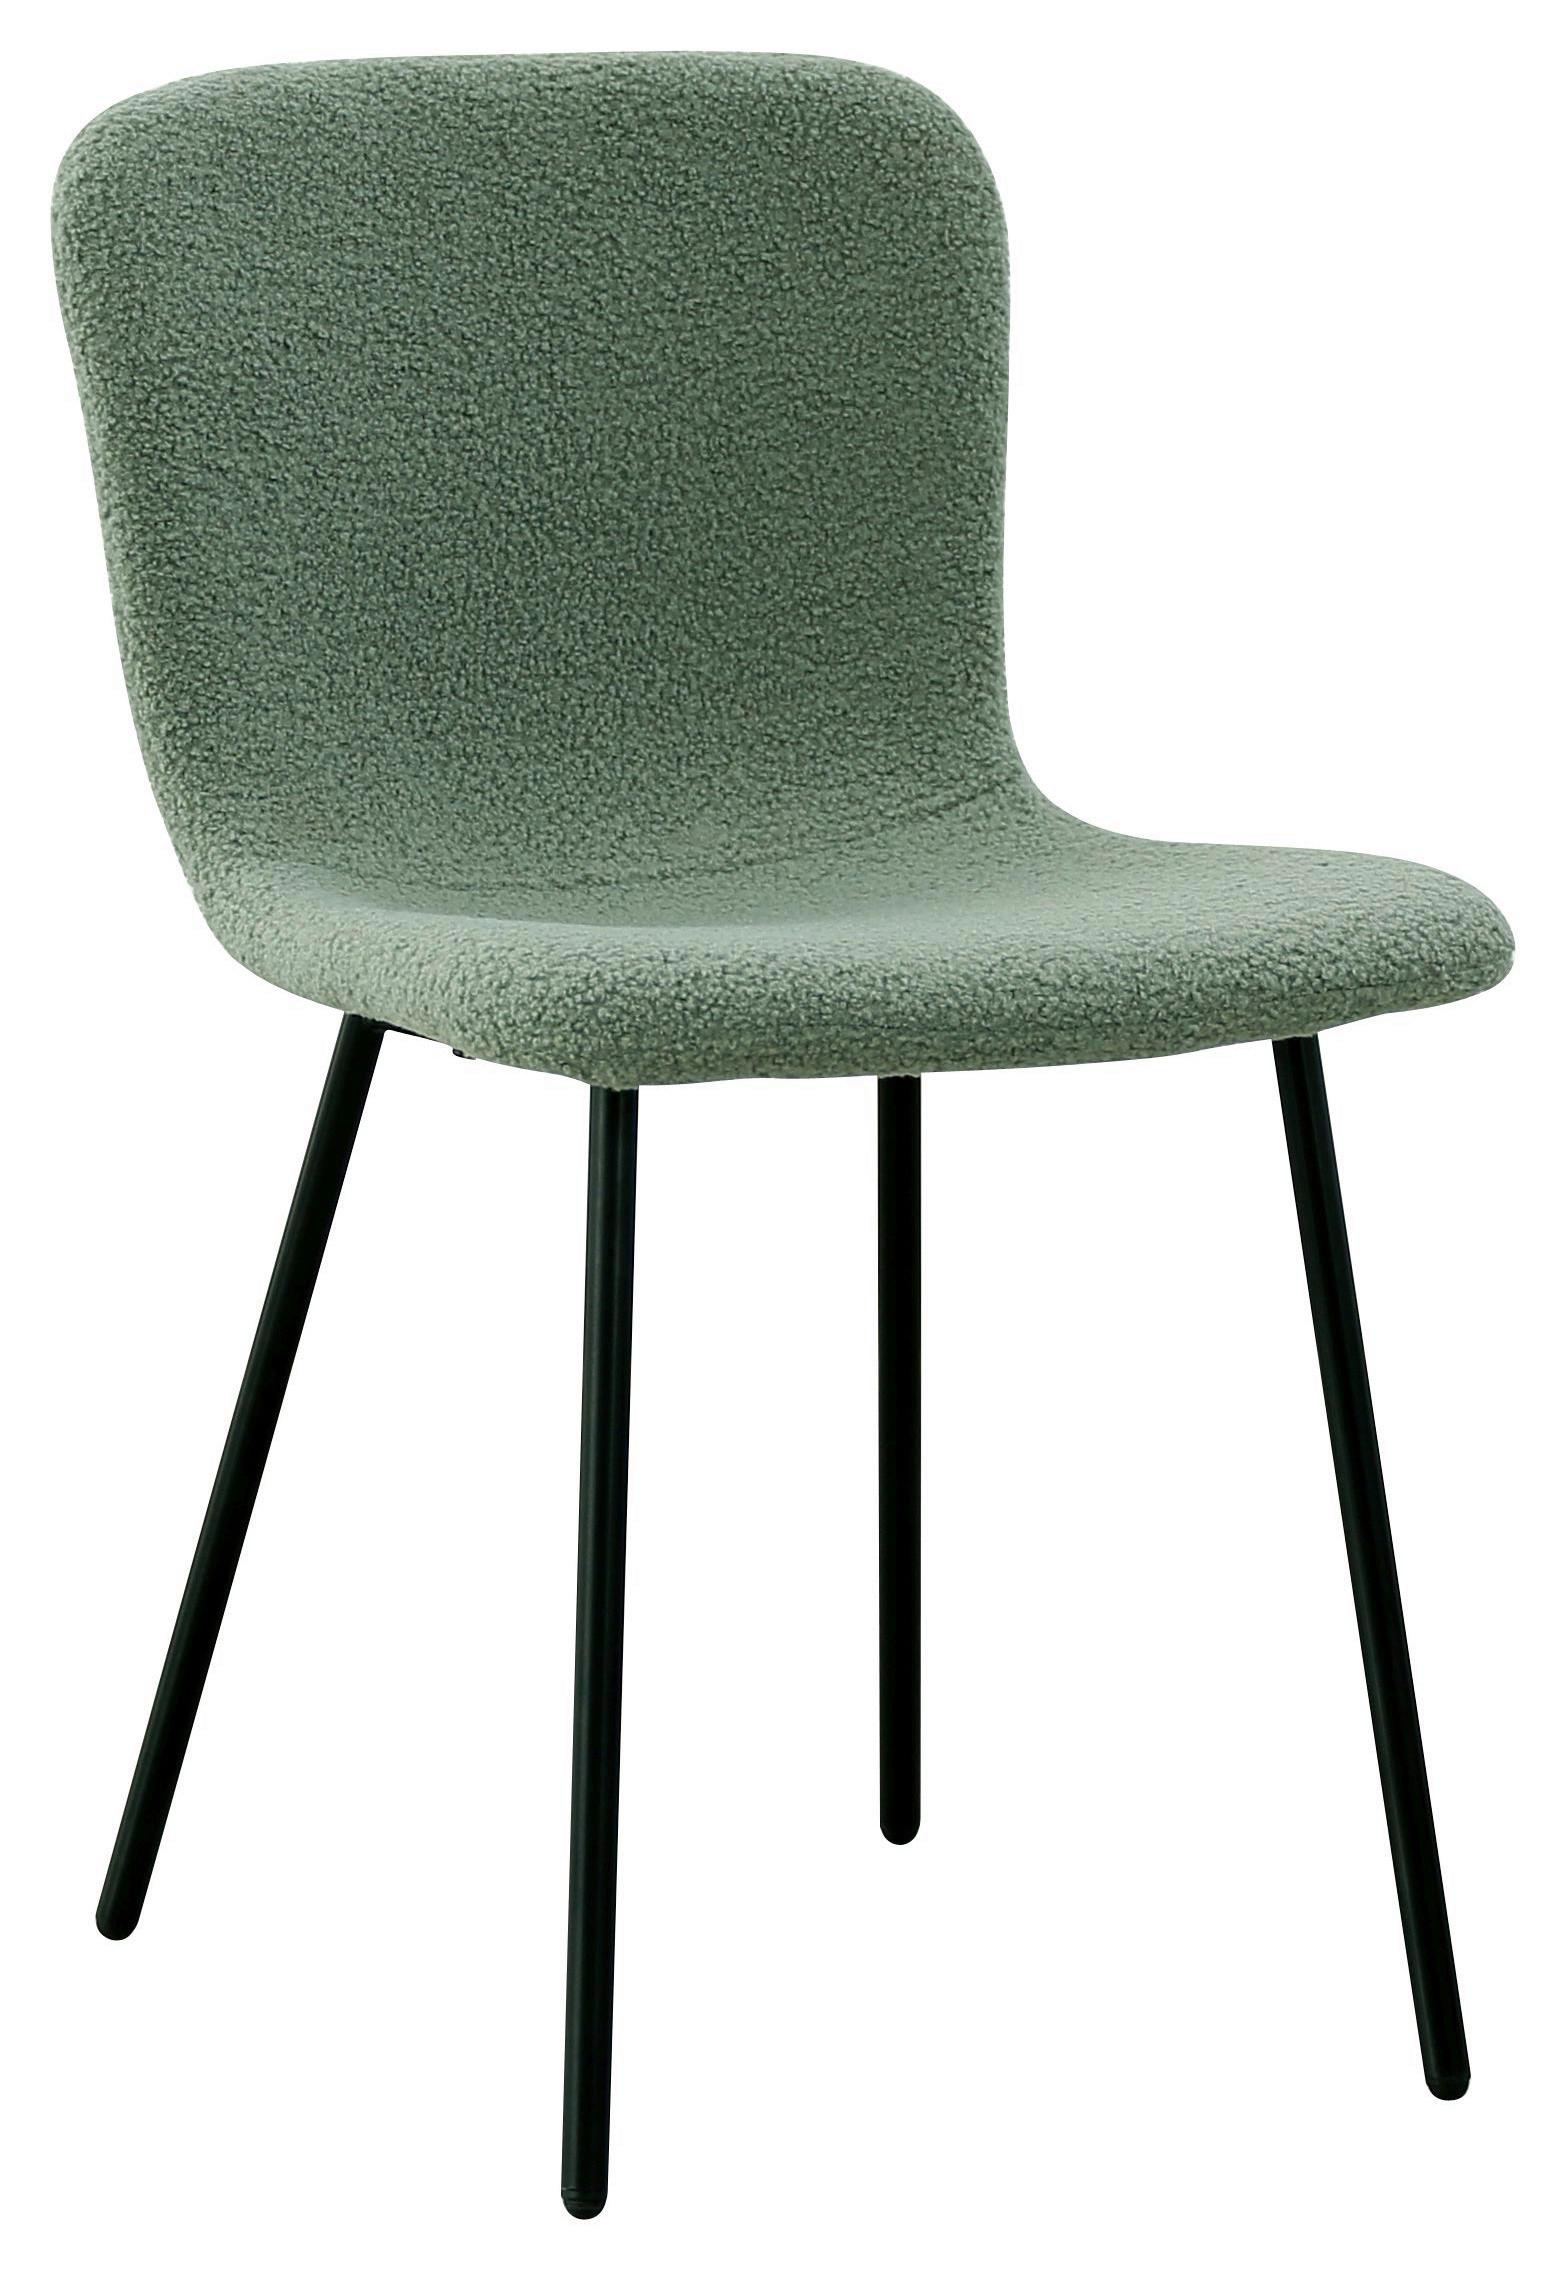 Stuhl in Mintgrün/Schwarz - Schwarz/Mintgrün, Design, Textil/Metall (44/79/51cm) - Modern Living